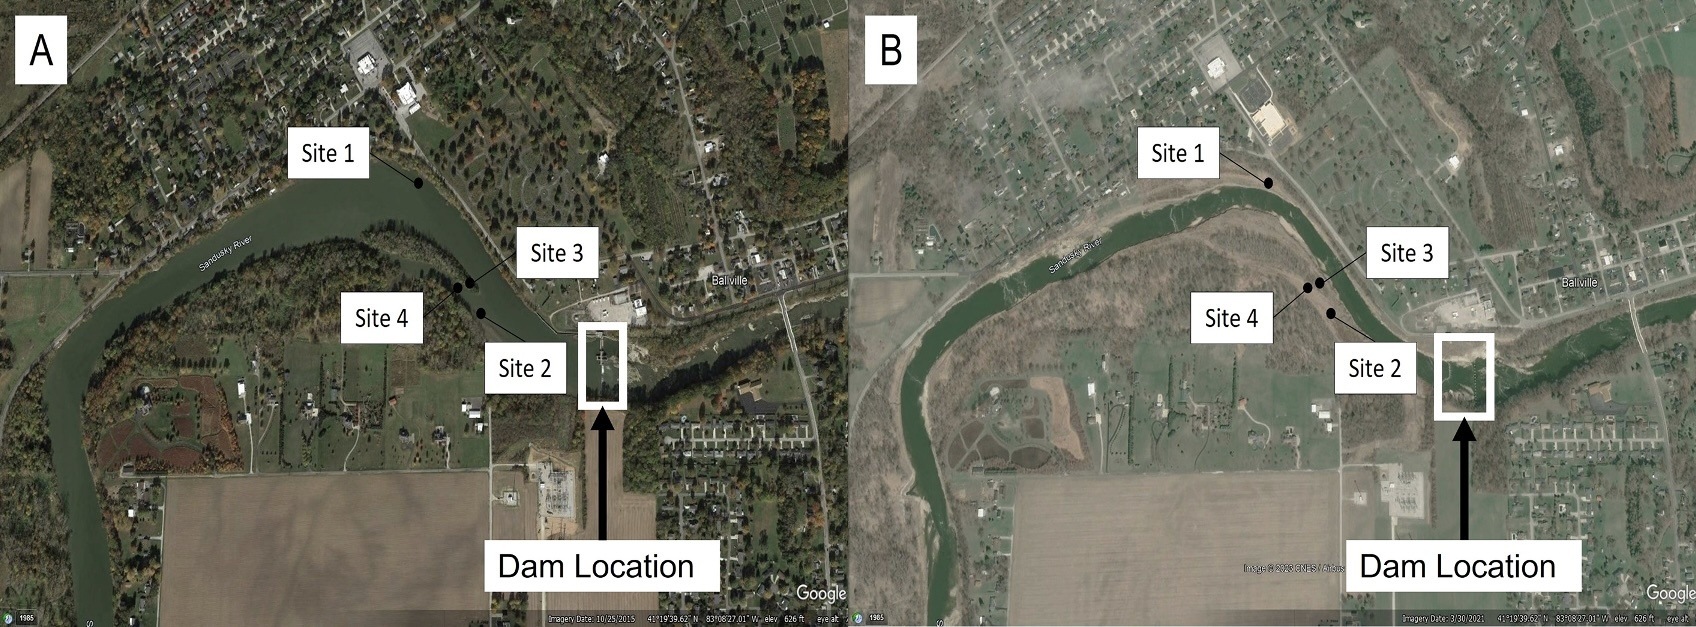 Aerial map images of Sandusky River near Fremont, Ohio